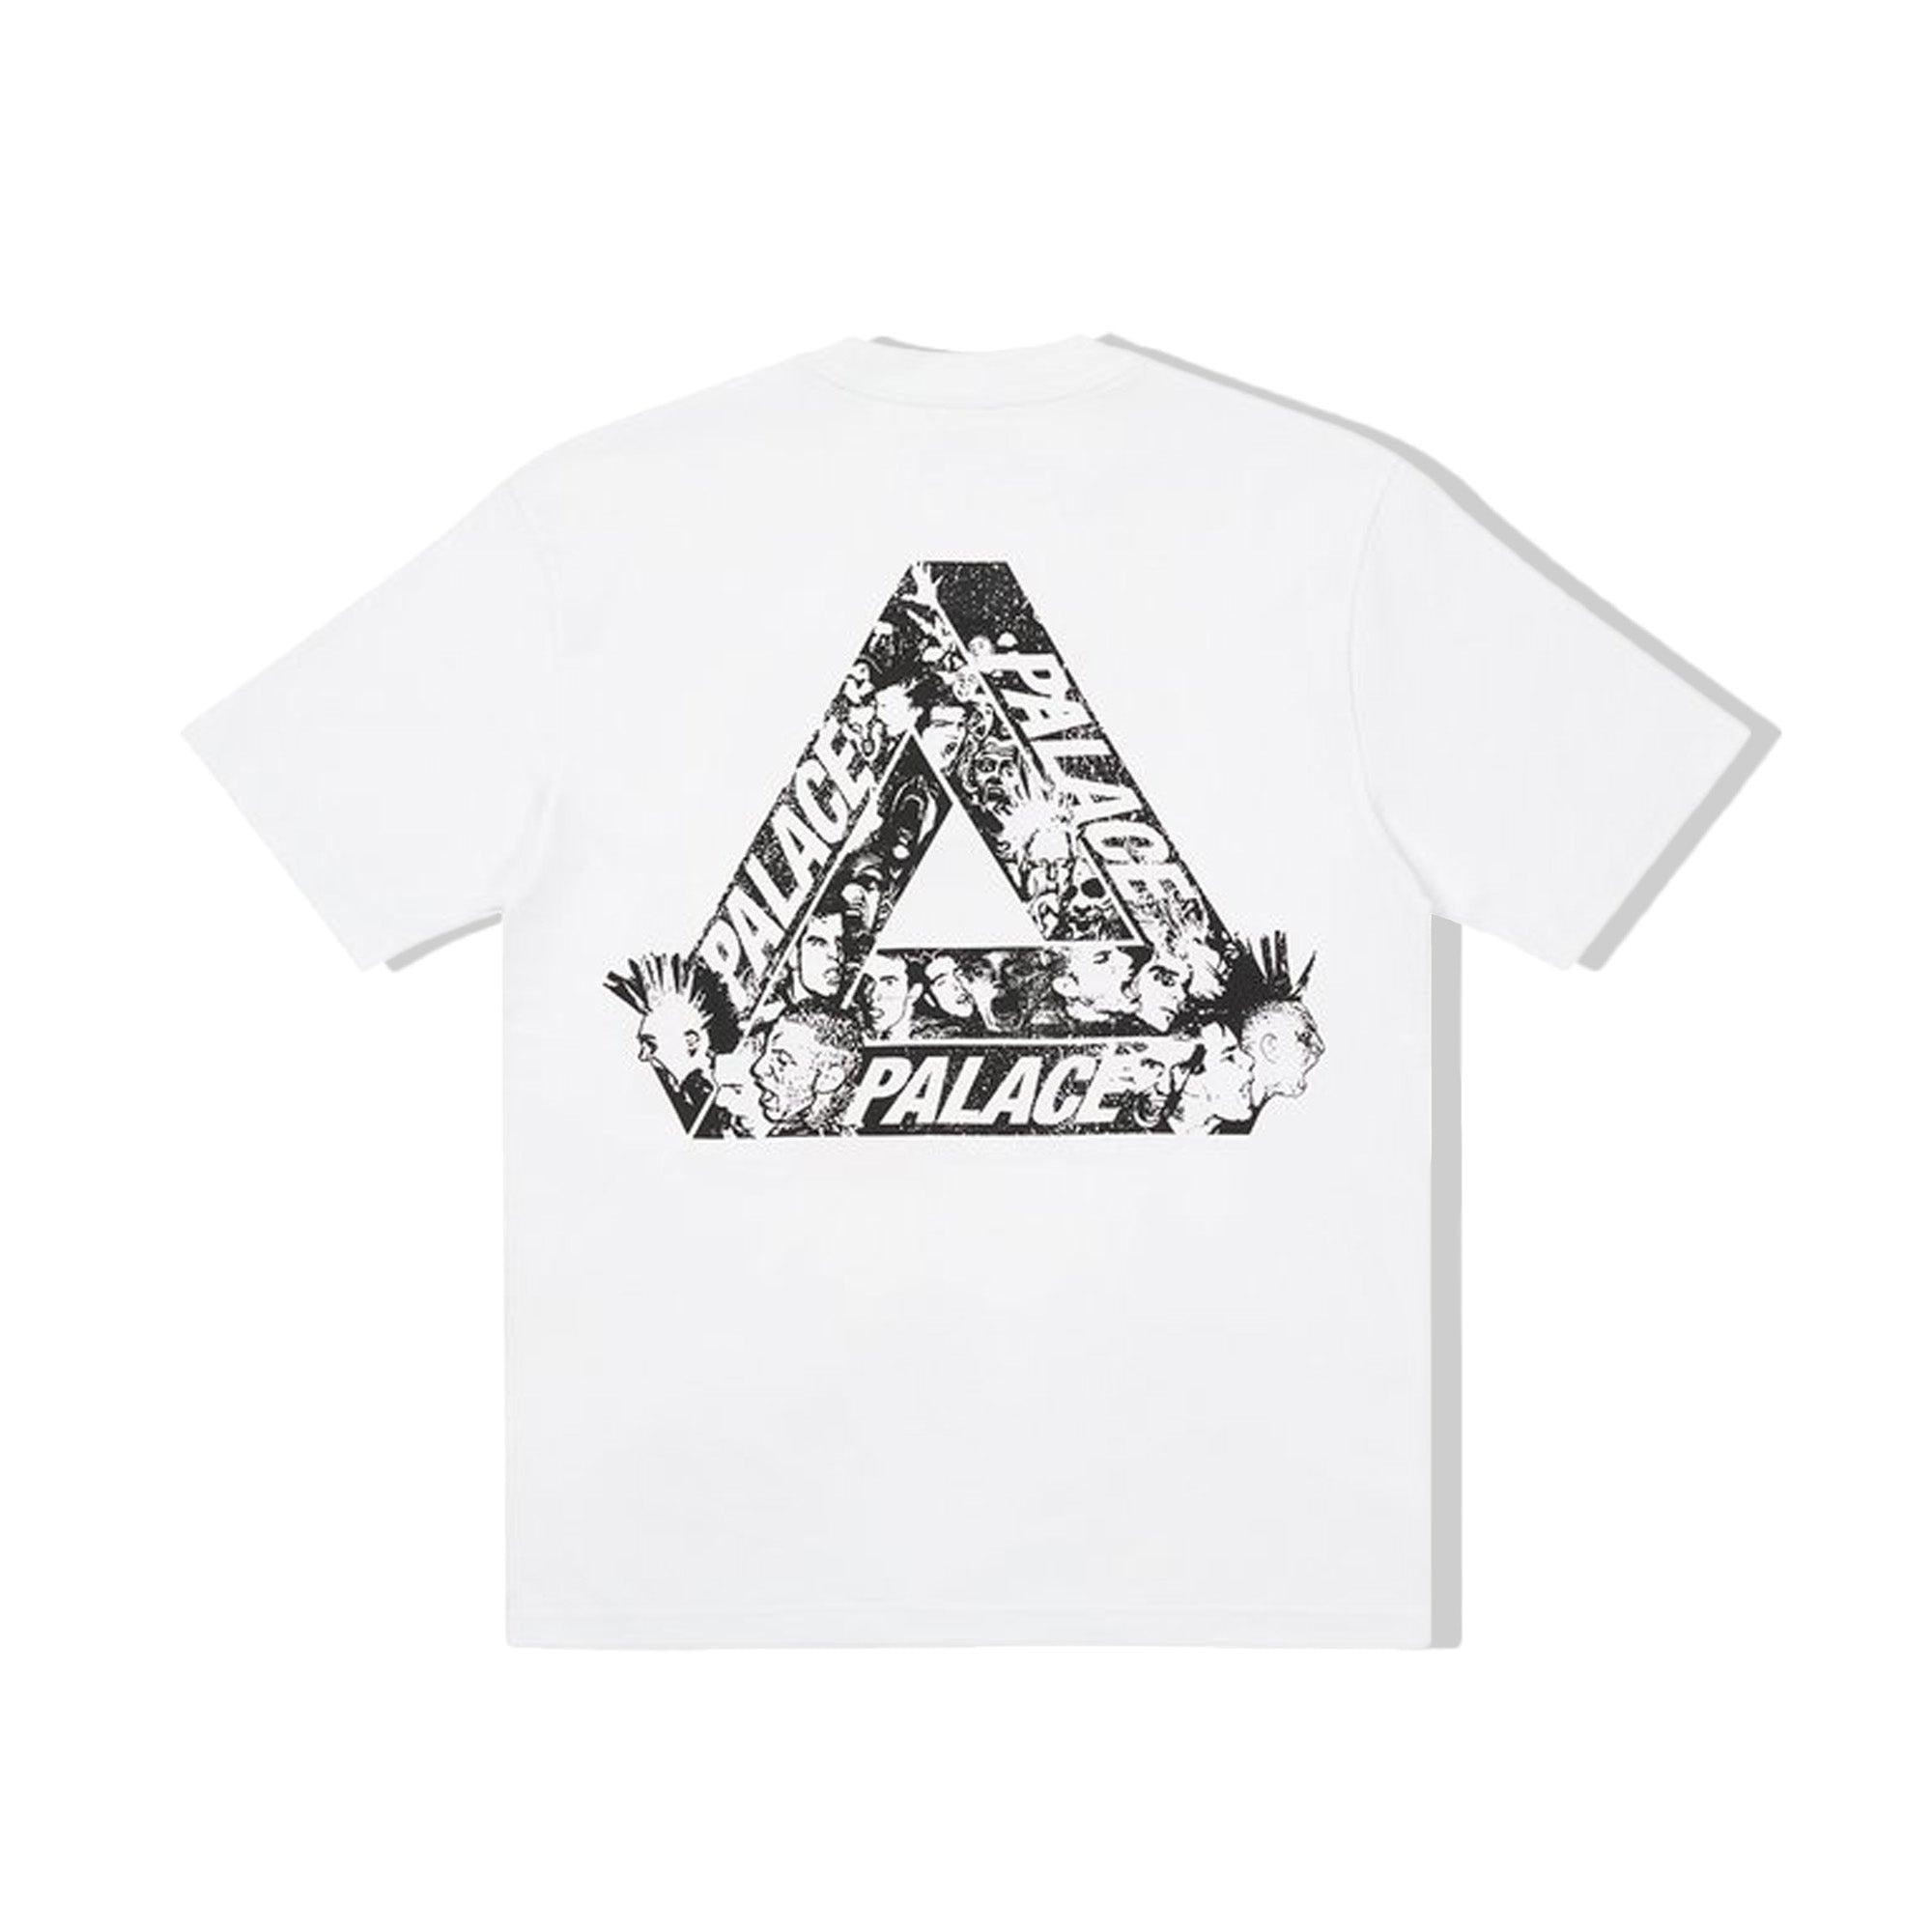 Buy Palace Palace Tri-Heads White T-Shirt Online